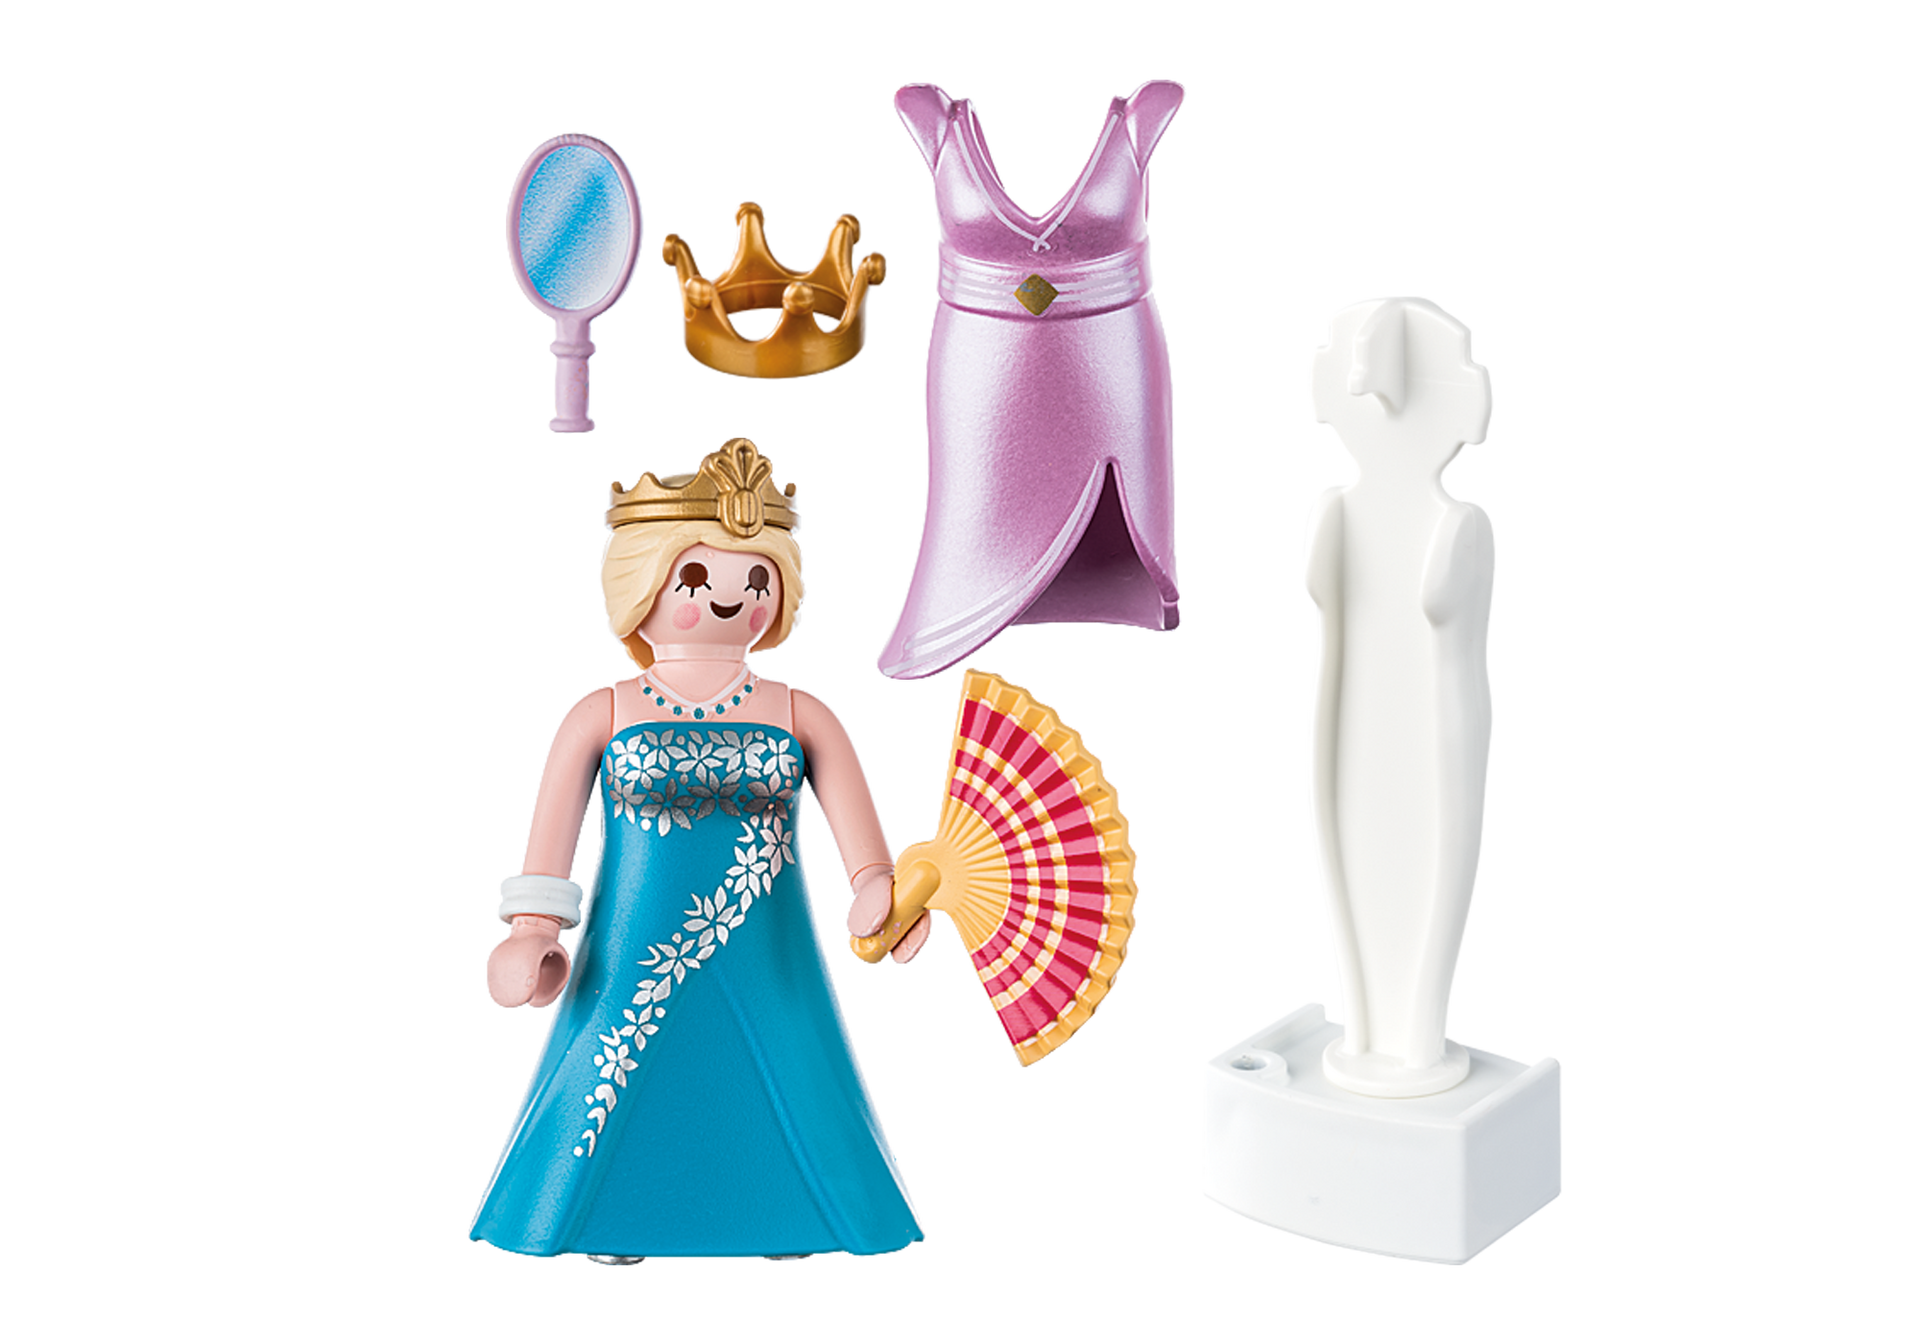 Playmobil princesses-mannequin couture door light green dress 5148 h375 